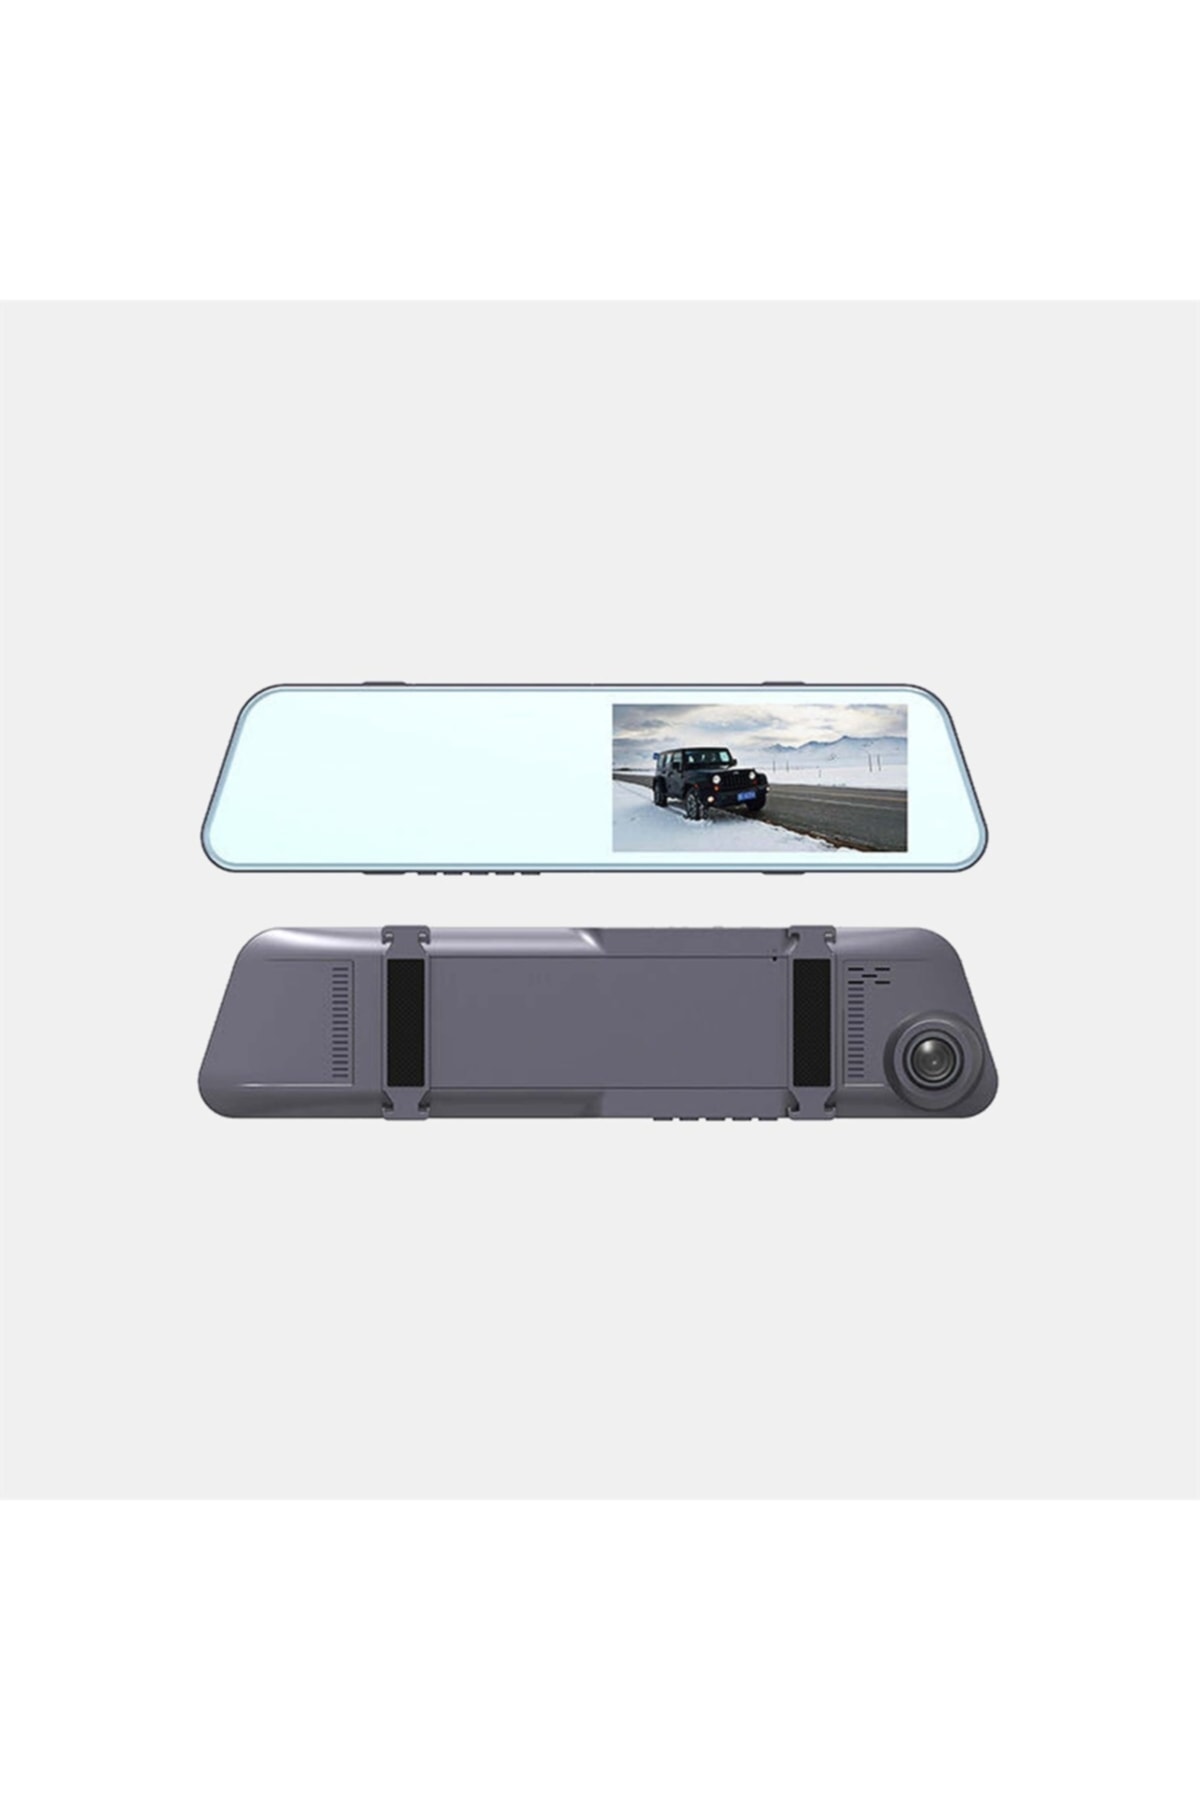 4.3 ınç ıps Dokunmatik Ekran Full Hd Dikiz Ayna Araç Kamerası